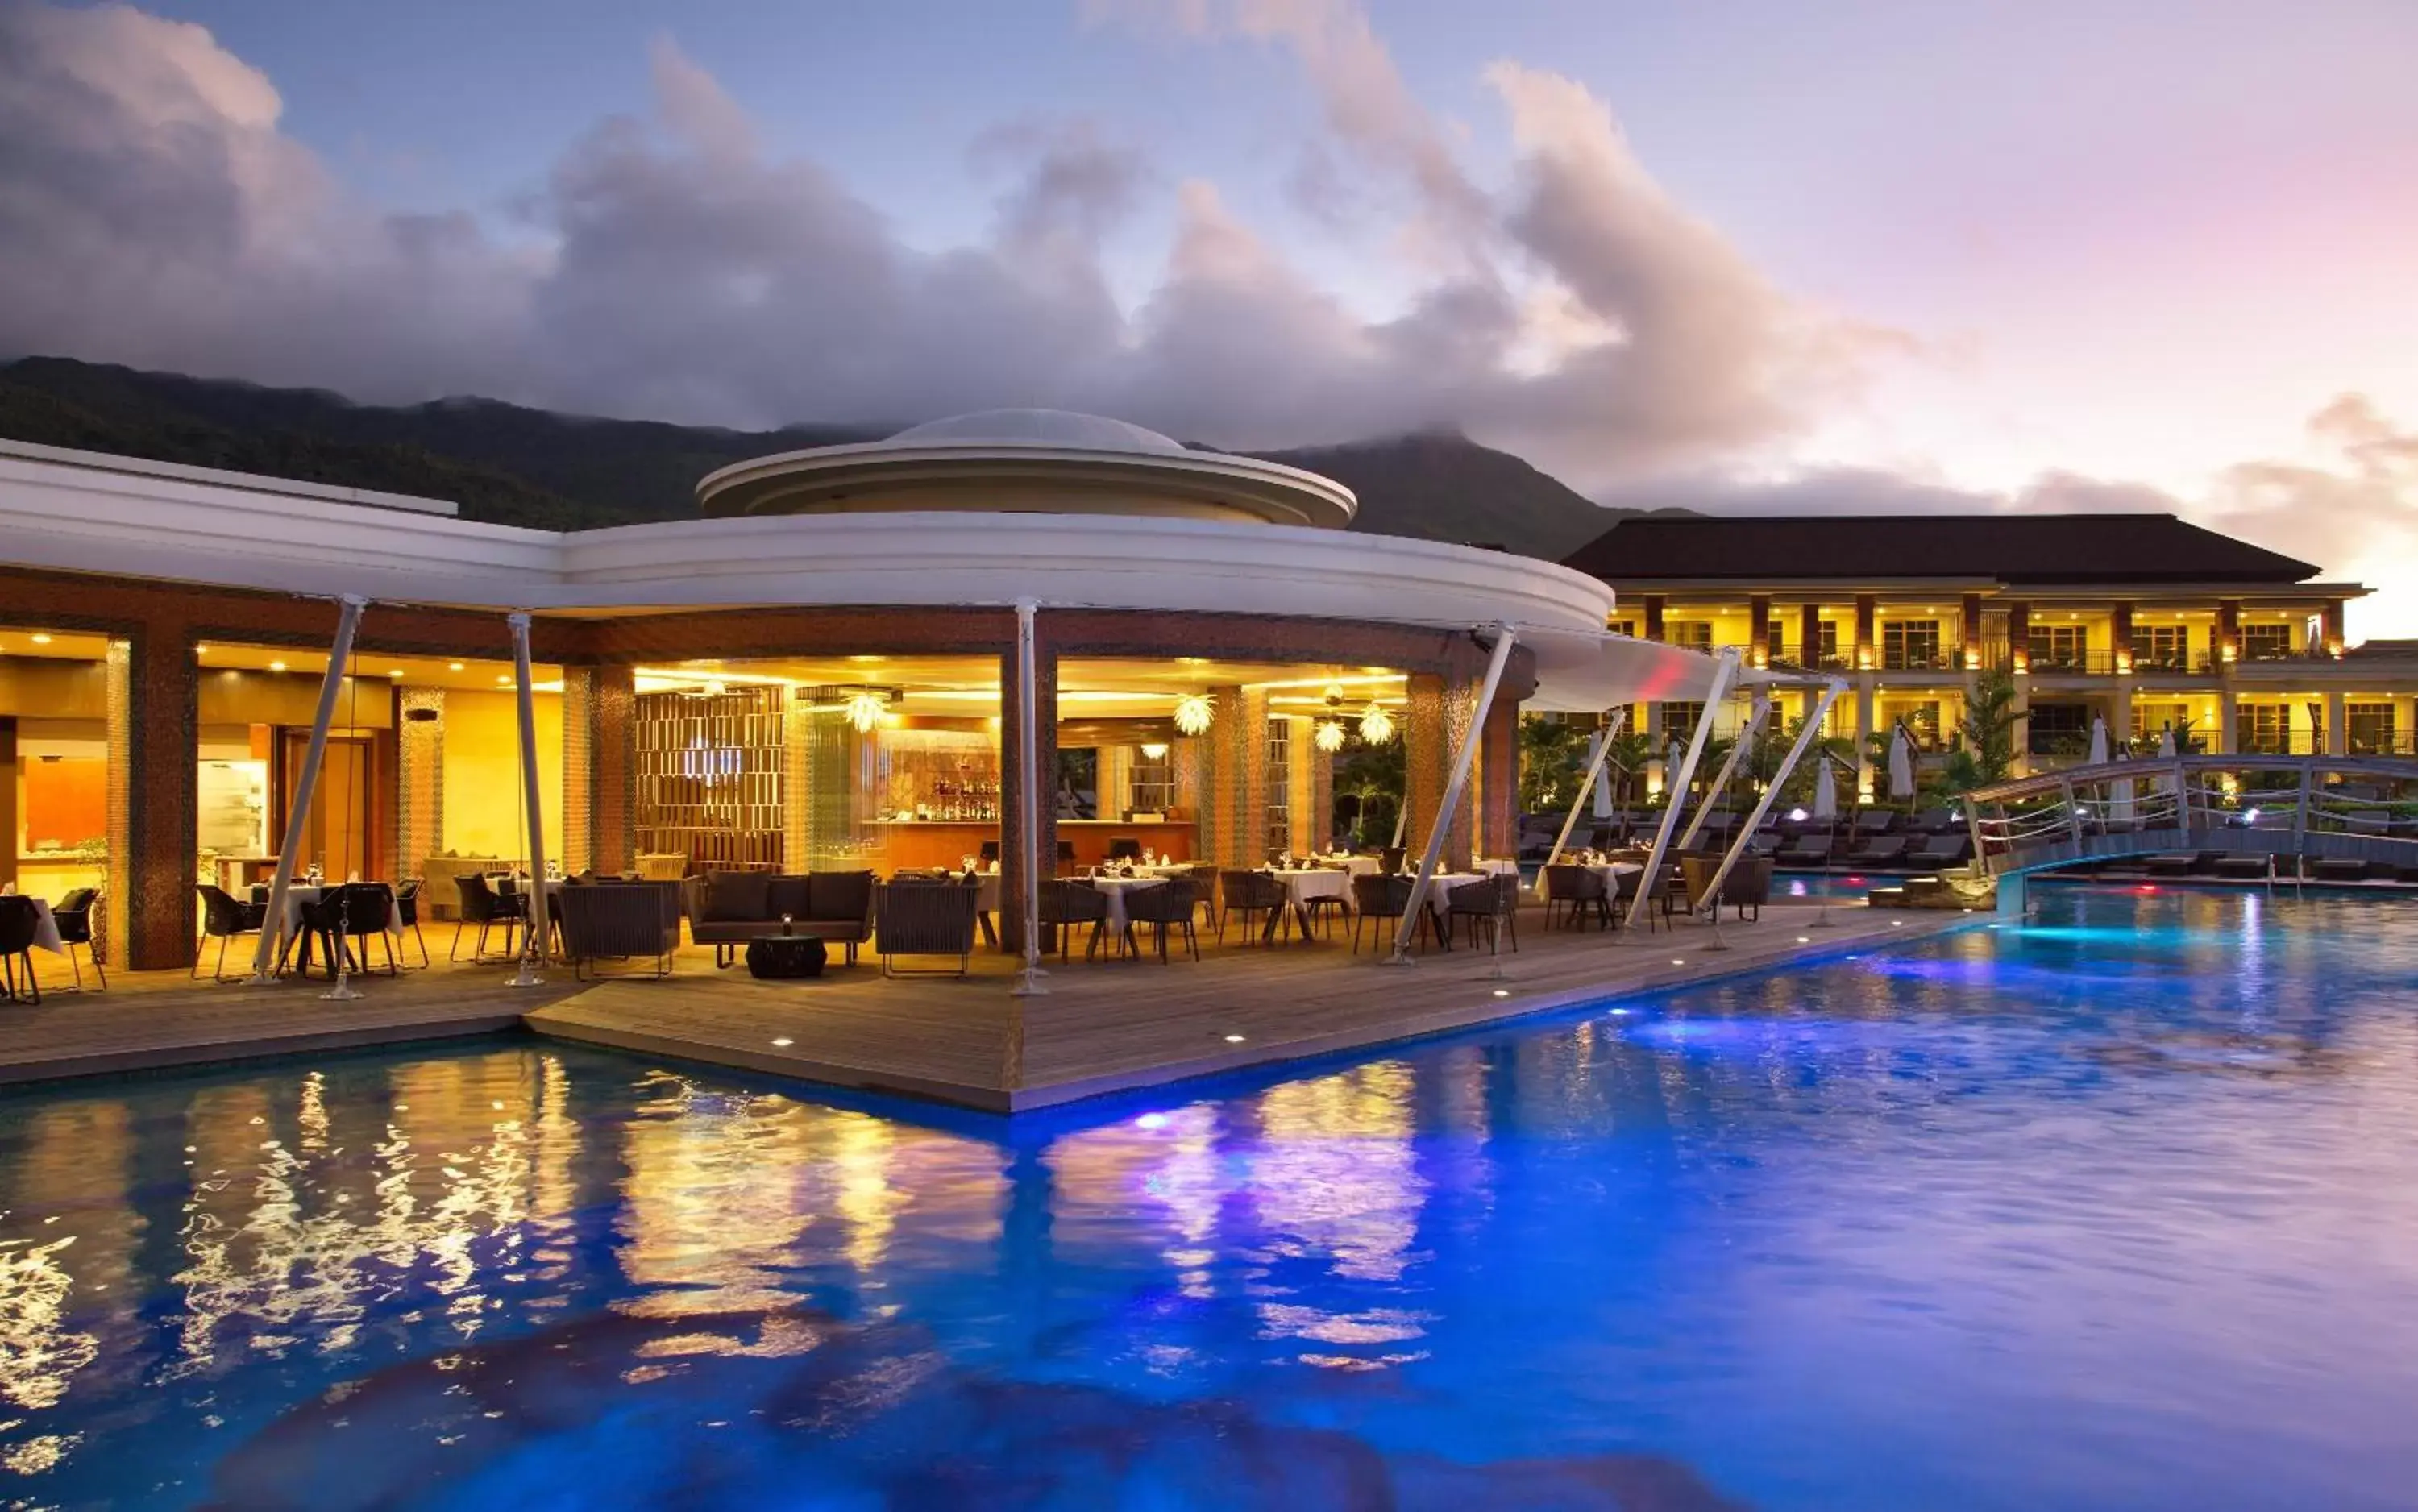 Property building, Swimming Pool in Savoy Seychelles Resort & Spa